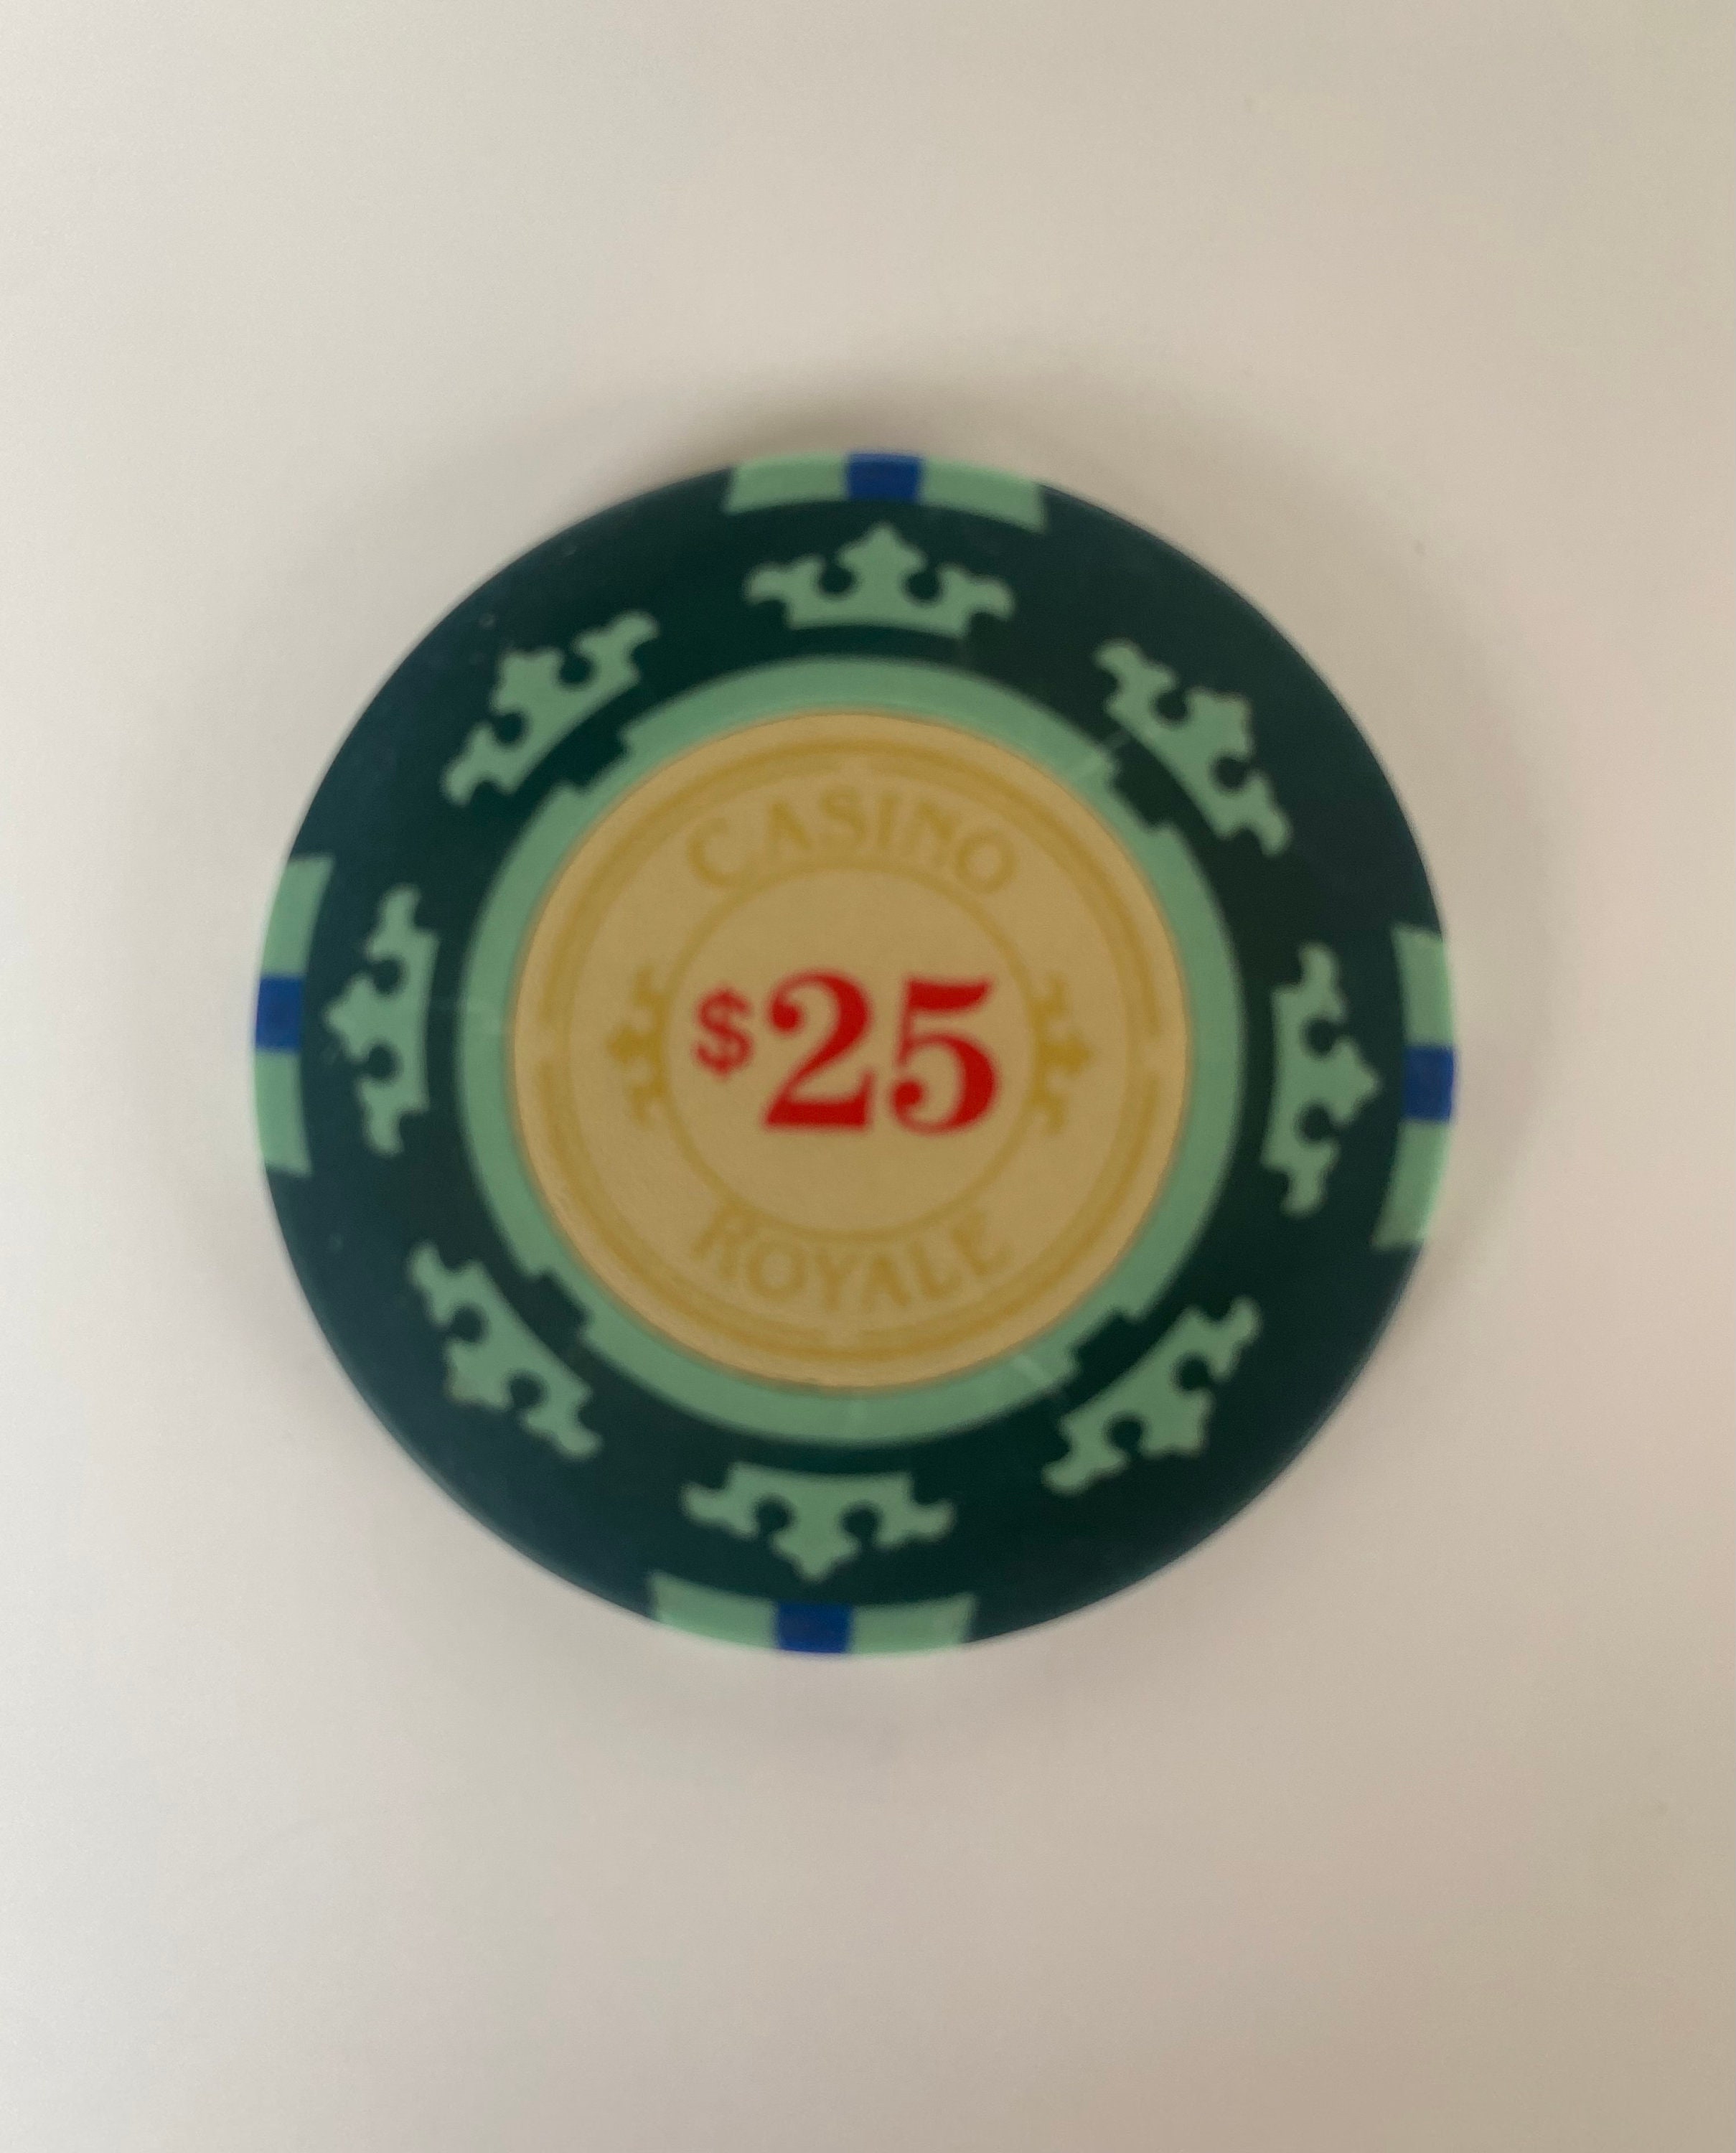 Las Vegas $100 Black Poker Chip Medallion Ornament